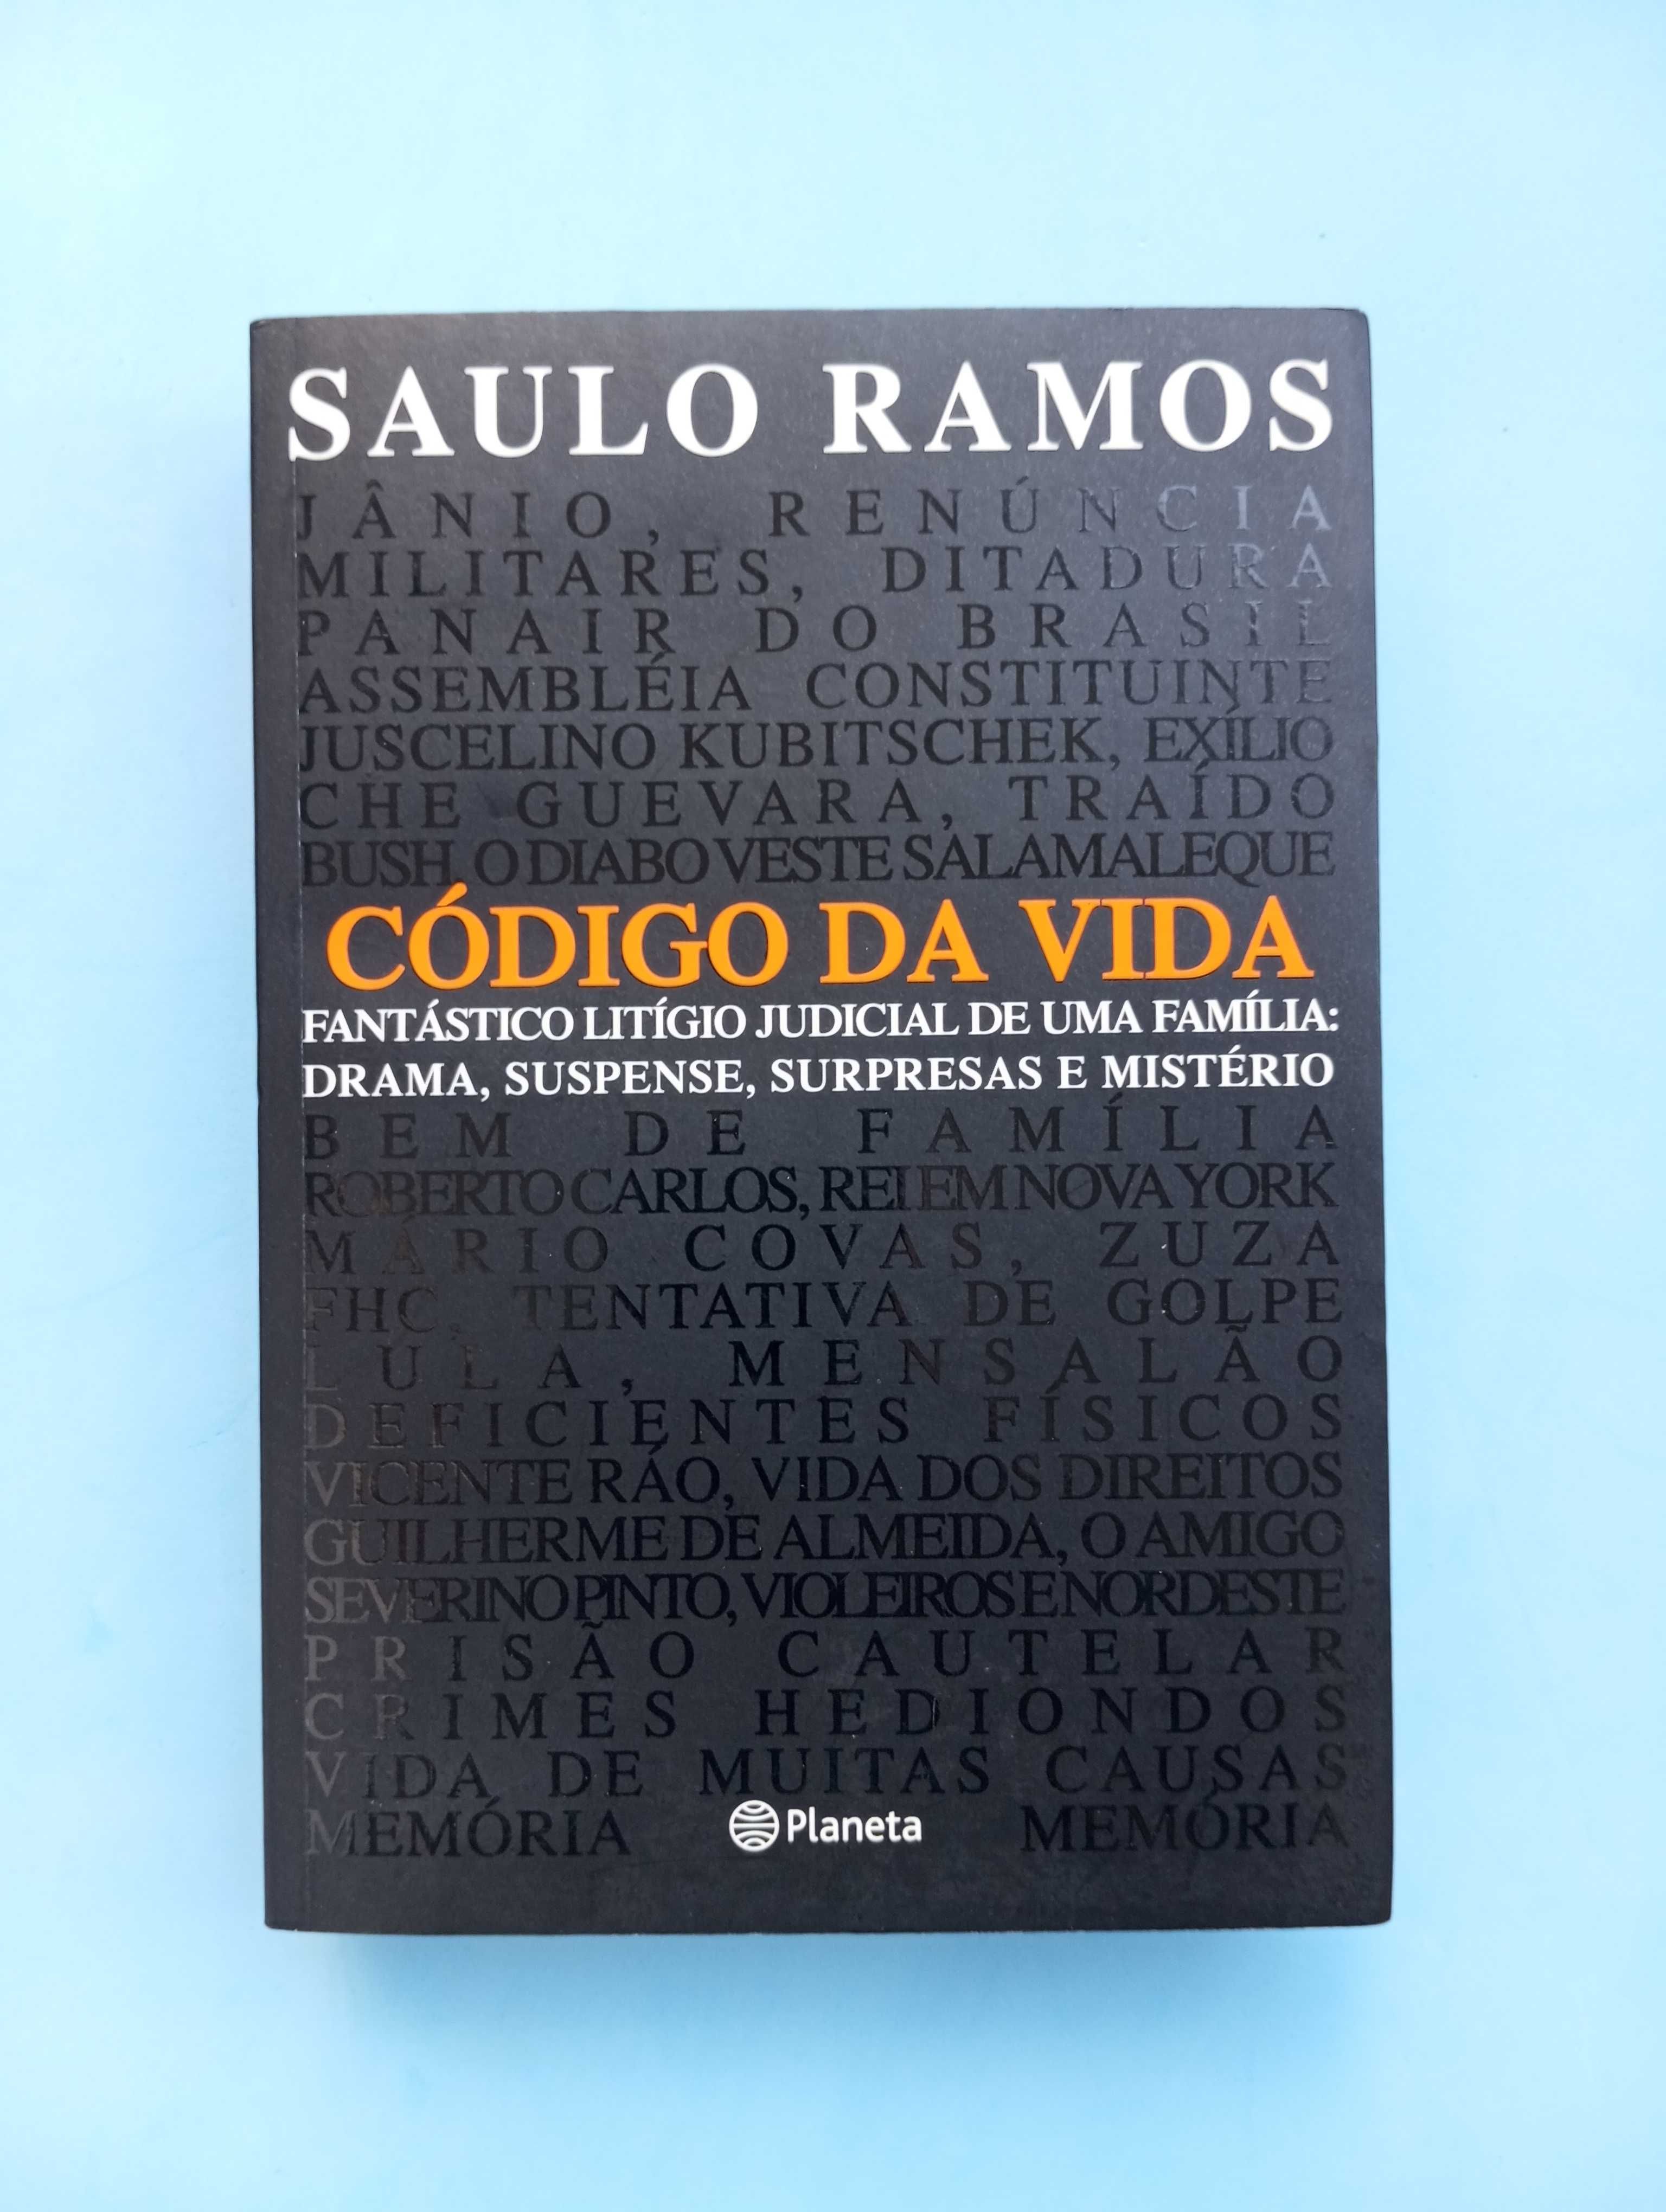 CÓDIGO DA VIDA - Saulo Ramos - Portes incluídos